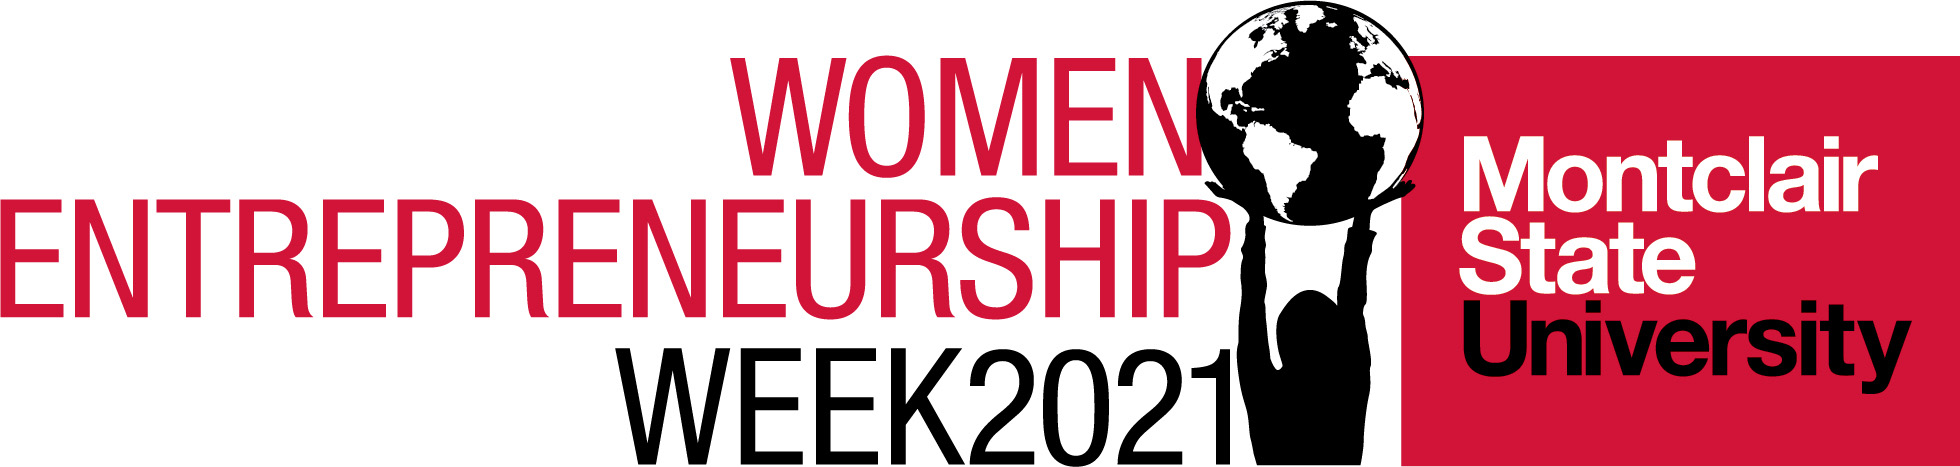 Women Entrepreneurship Week 2021